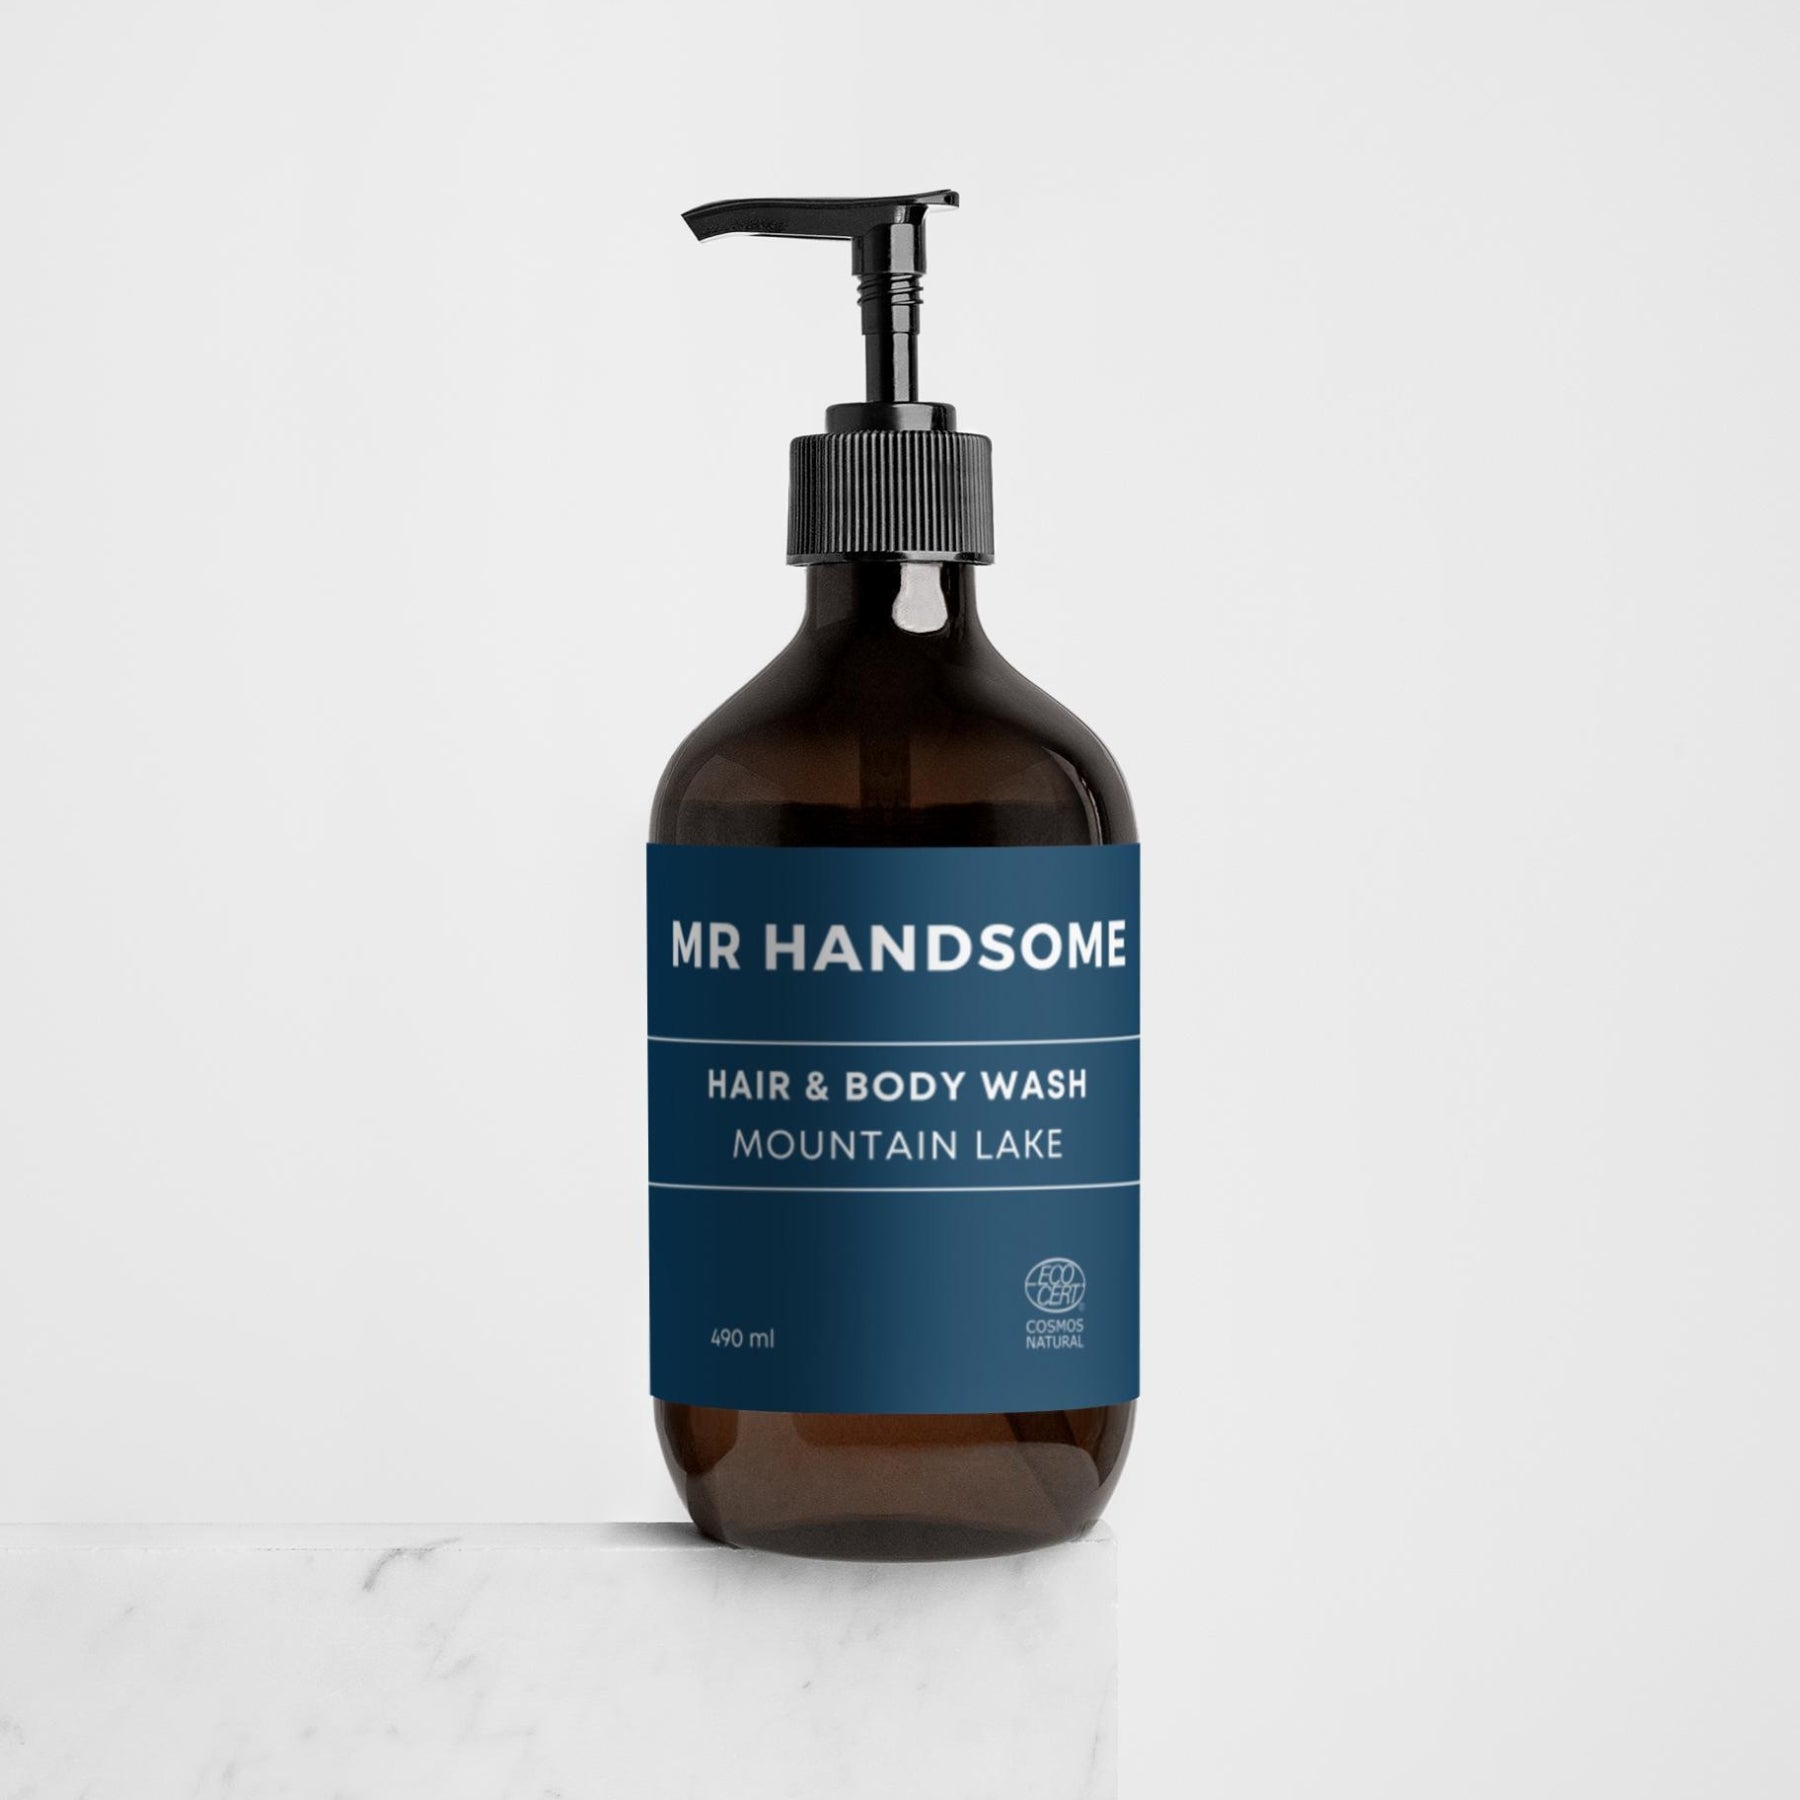 Hair & Body Wash | Mountain Lake - MR HANDSOME